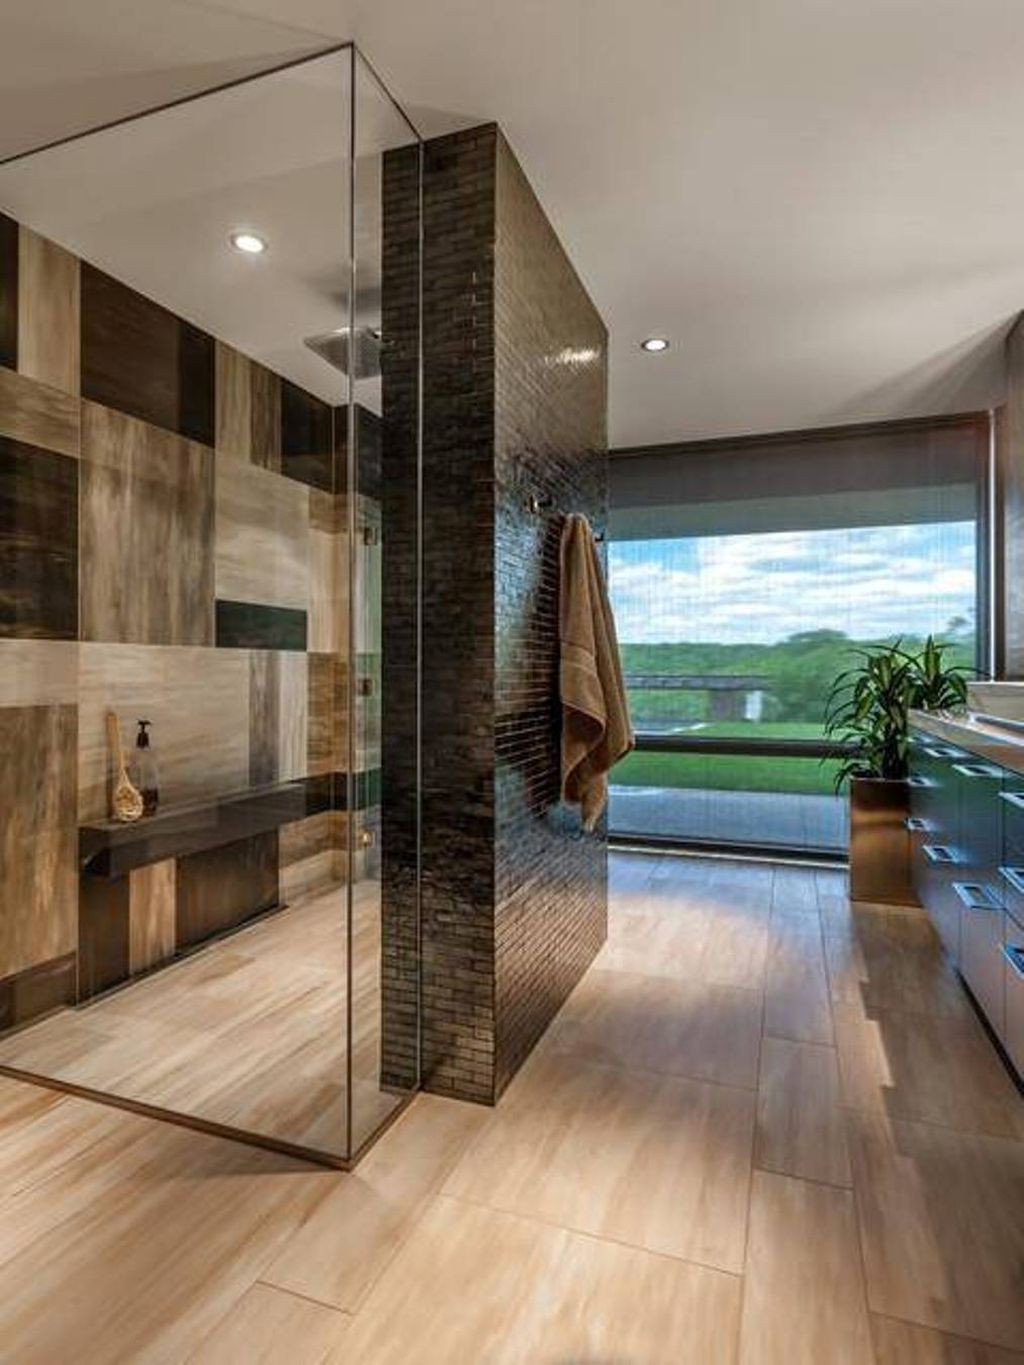 Cool Bathroom Designs
 20 Cool Modern Bathroom Design Ideas